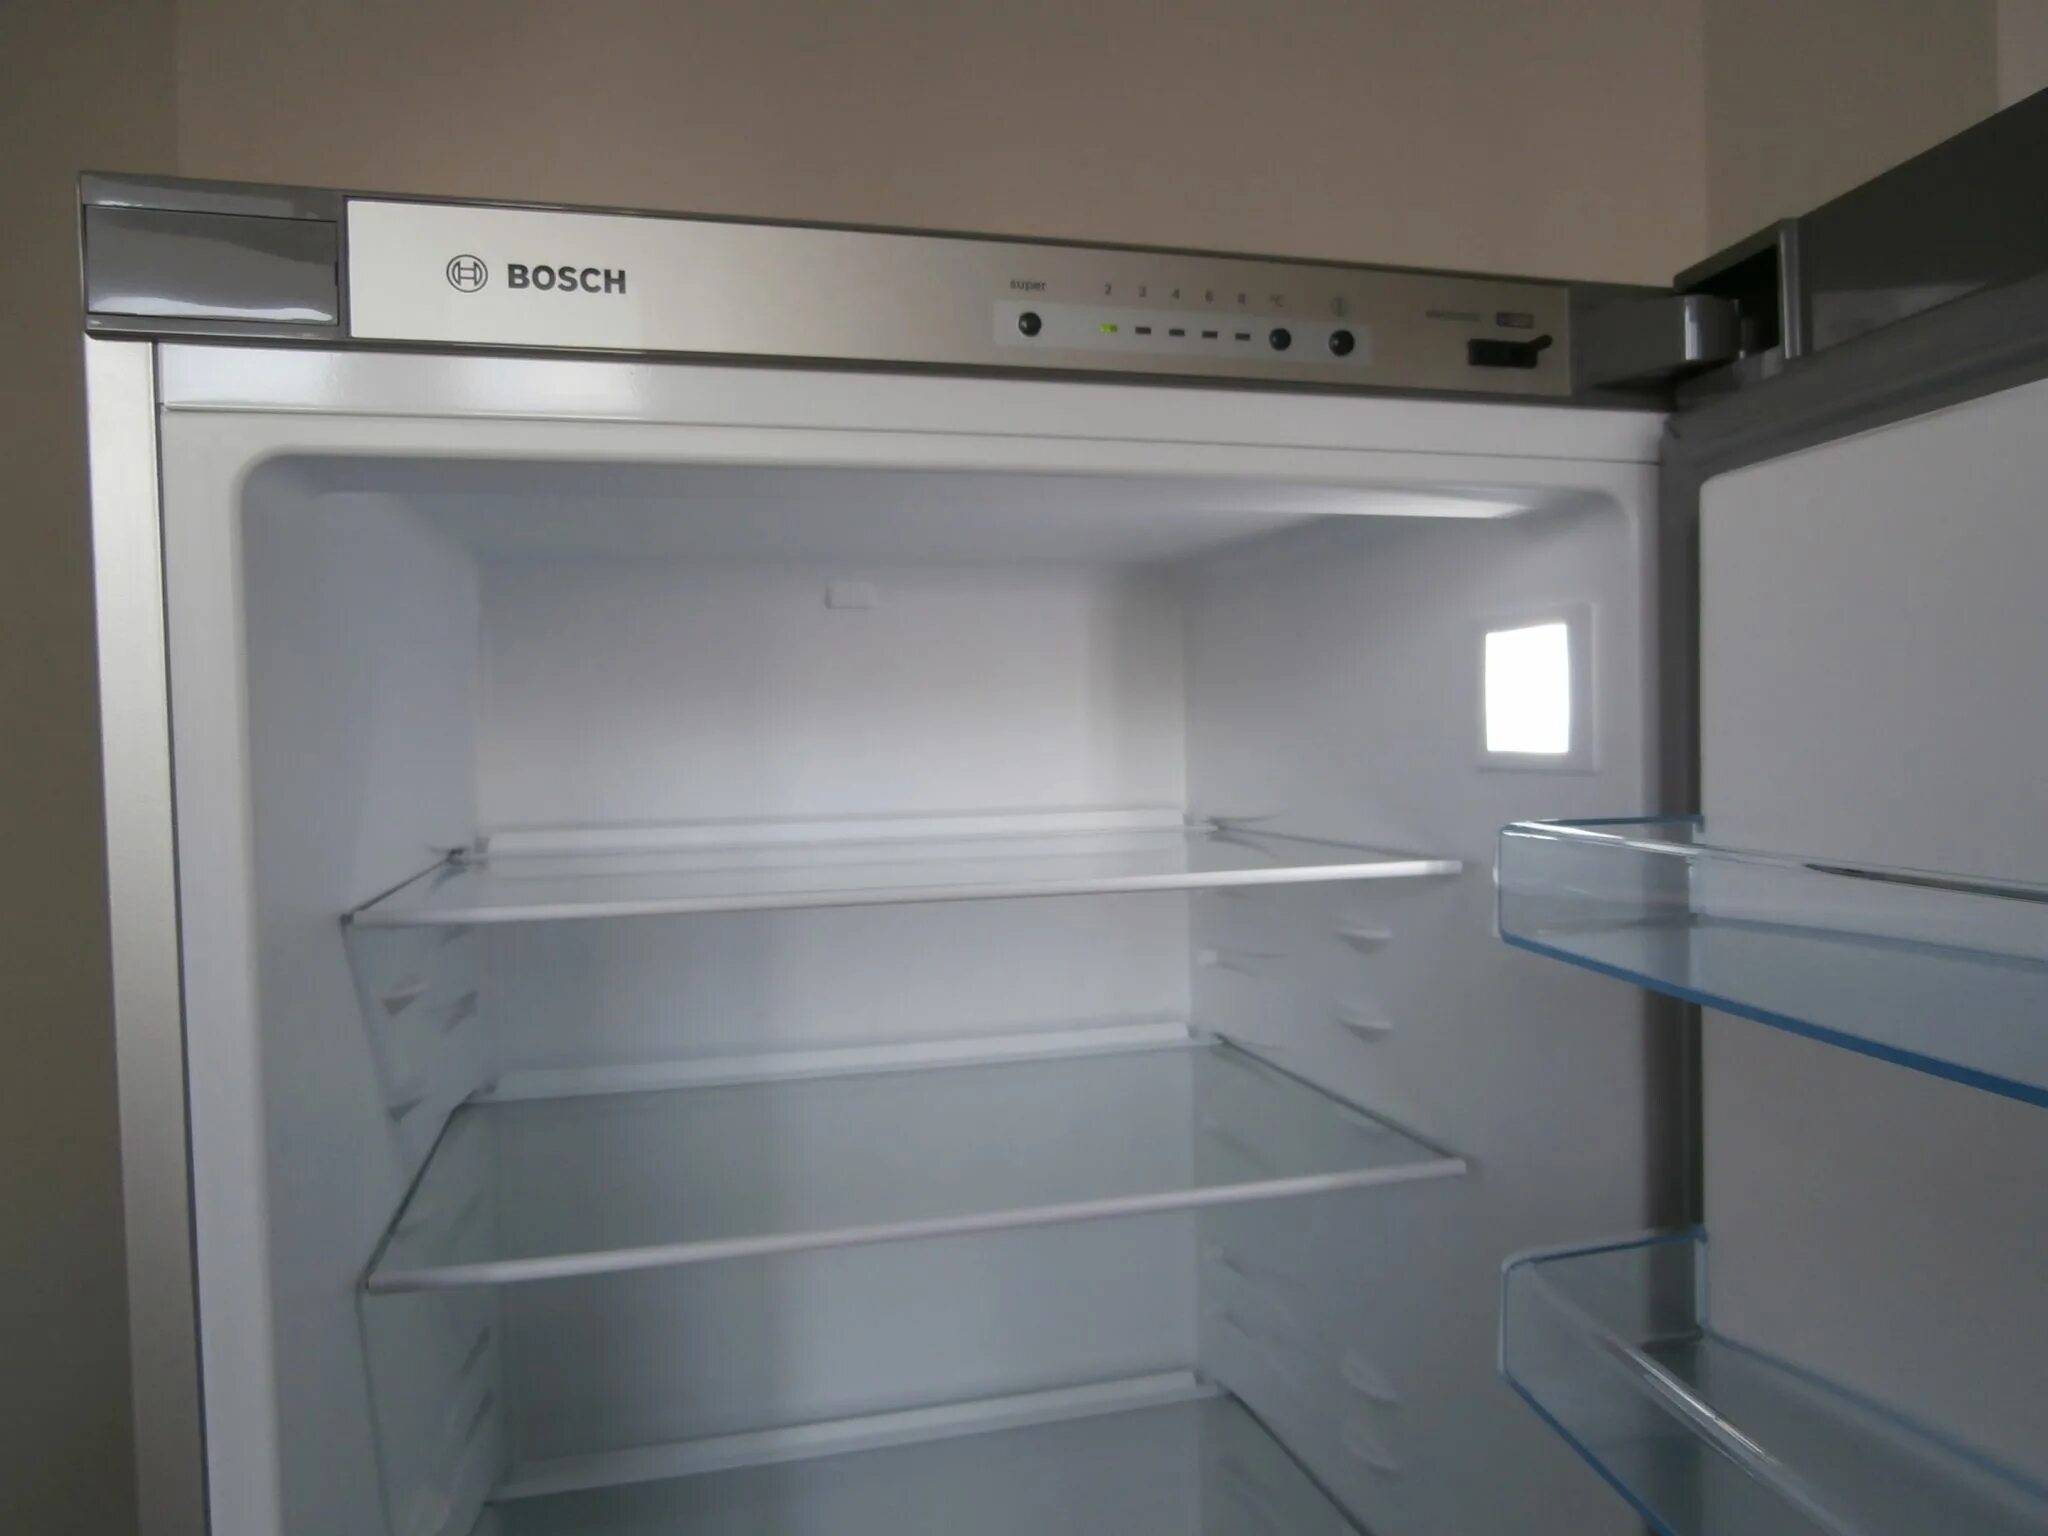 Холодильник Bosch kgv36nl1ar. Холодильник Bosch serie 2 NATURECOOL kgv36nl1ar,. Холодильник Bosch kgv36nl1ar Bosch. Двухкамерный холодильник Bosch KGV 36 nl 1 ar.